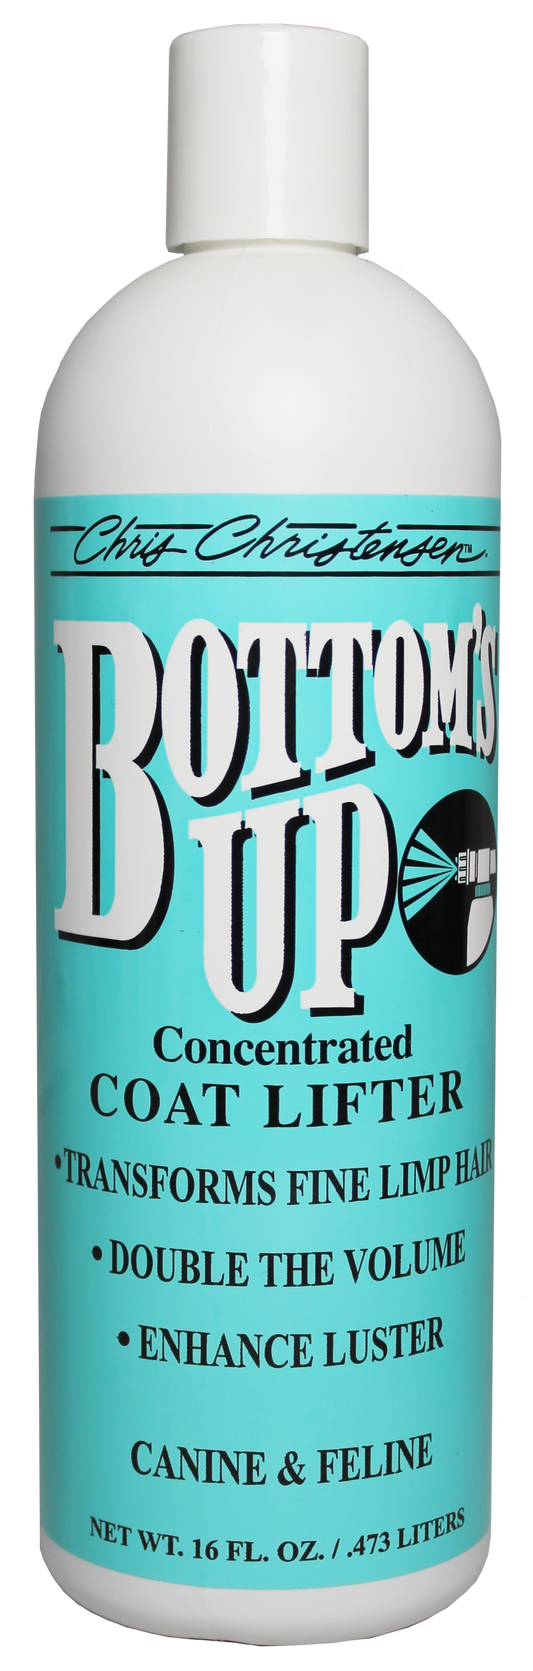 Bottoms Up Coat Lifter